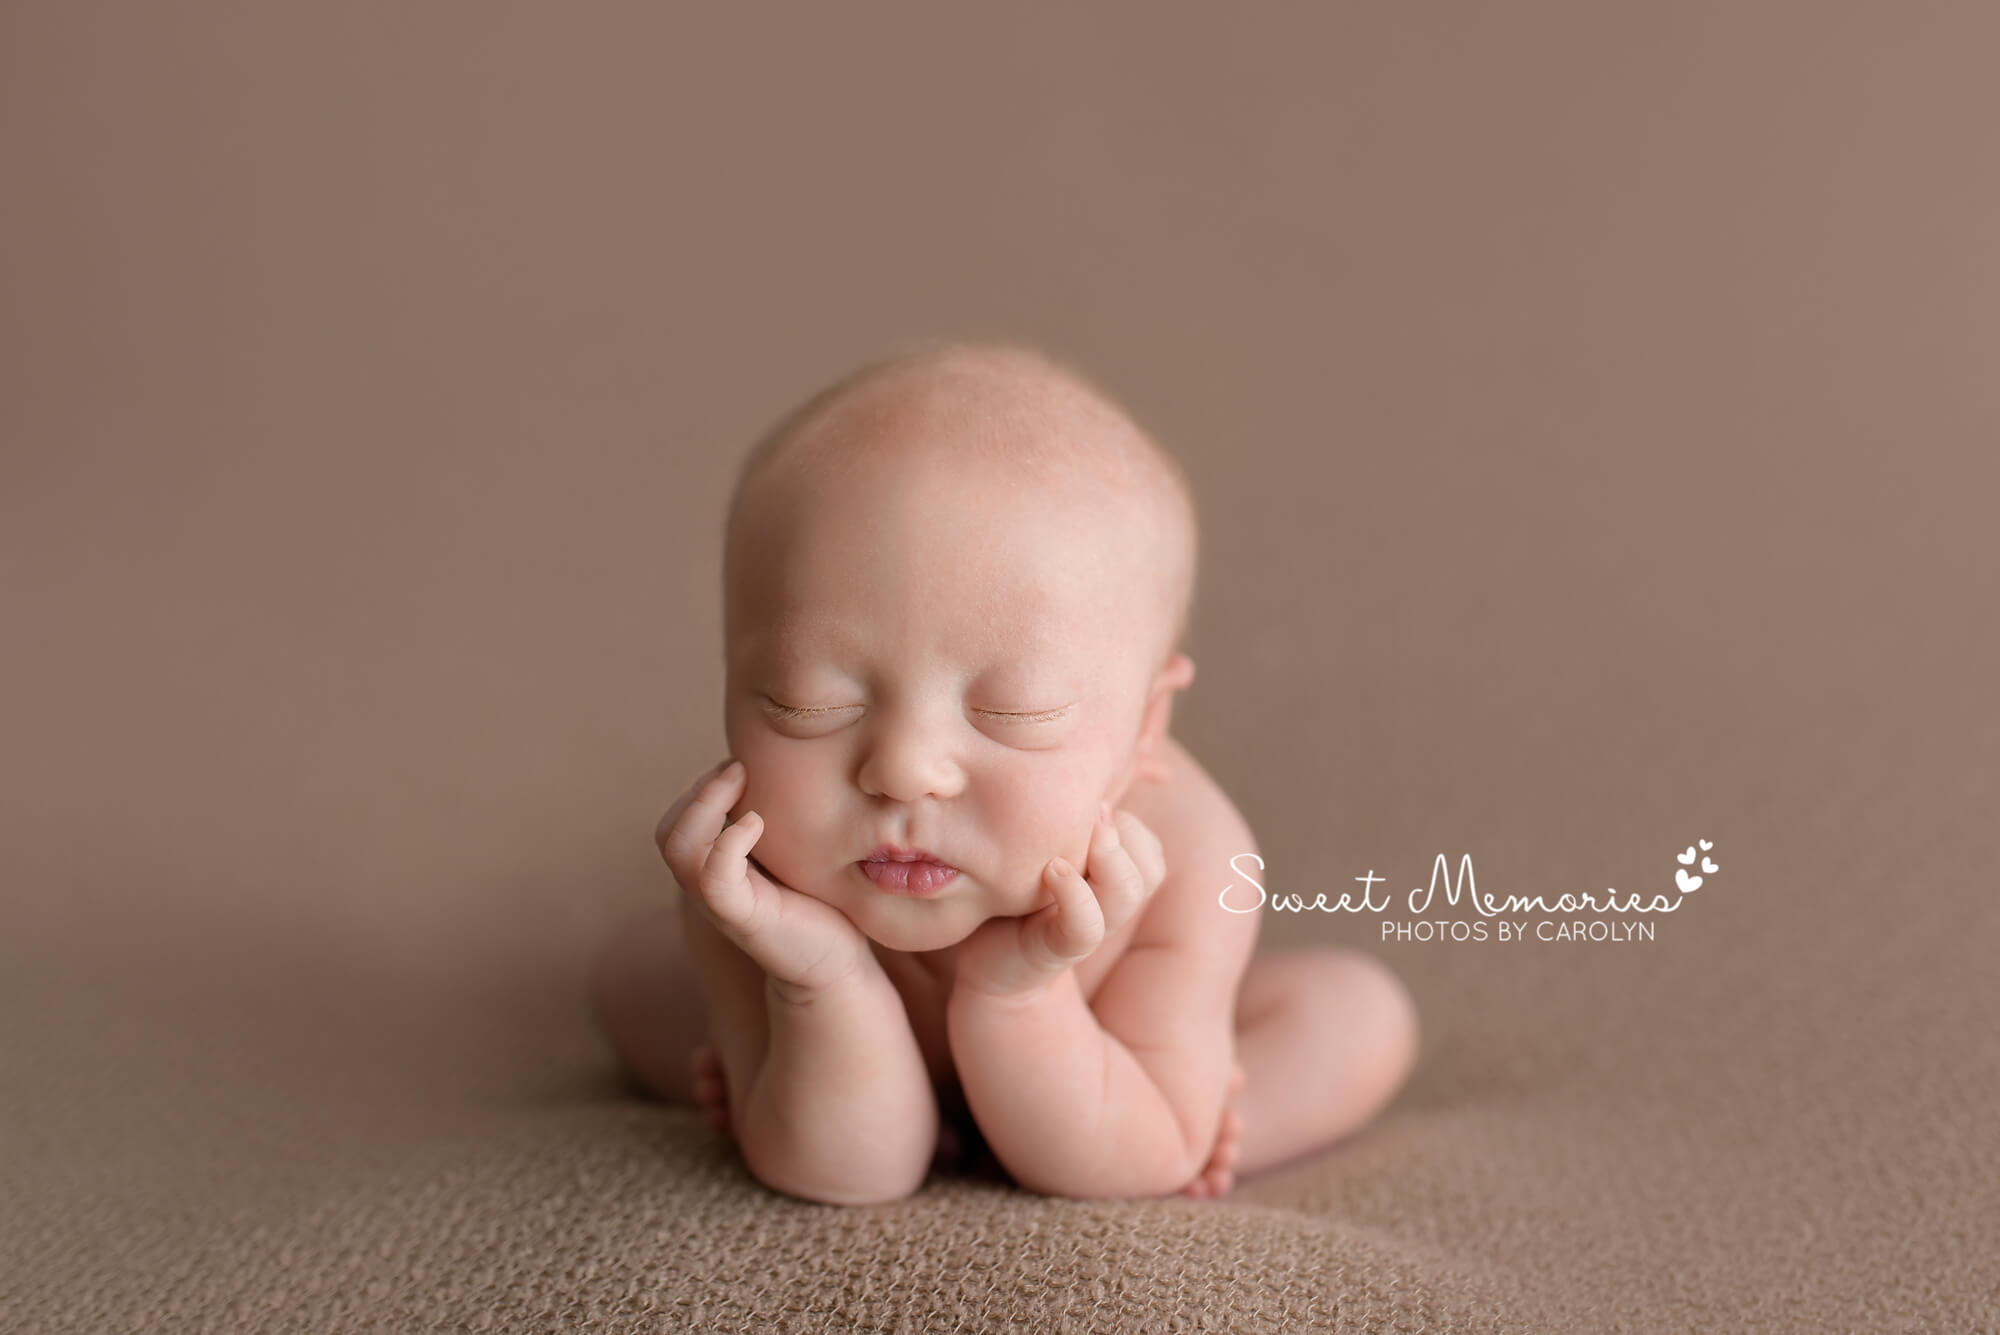 newborn baby boy on brown in froggy pose composite | Warrington, PA newborn photographer | Sweet Memories Photos by Carolyn, Quakertown Pennsylvania